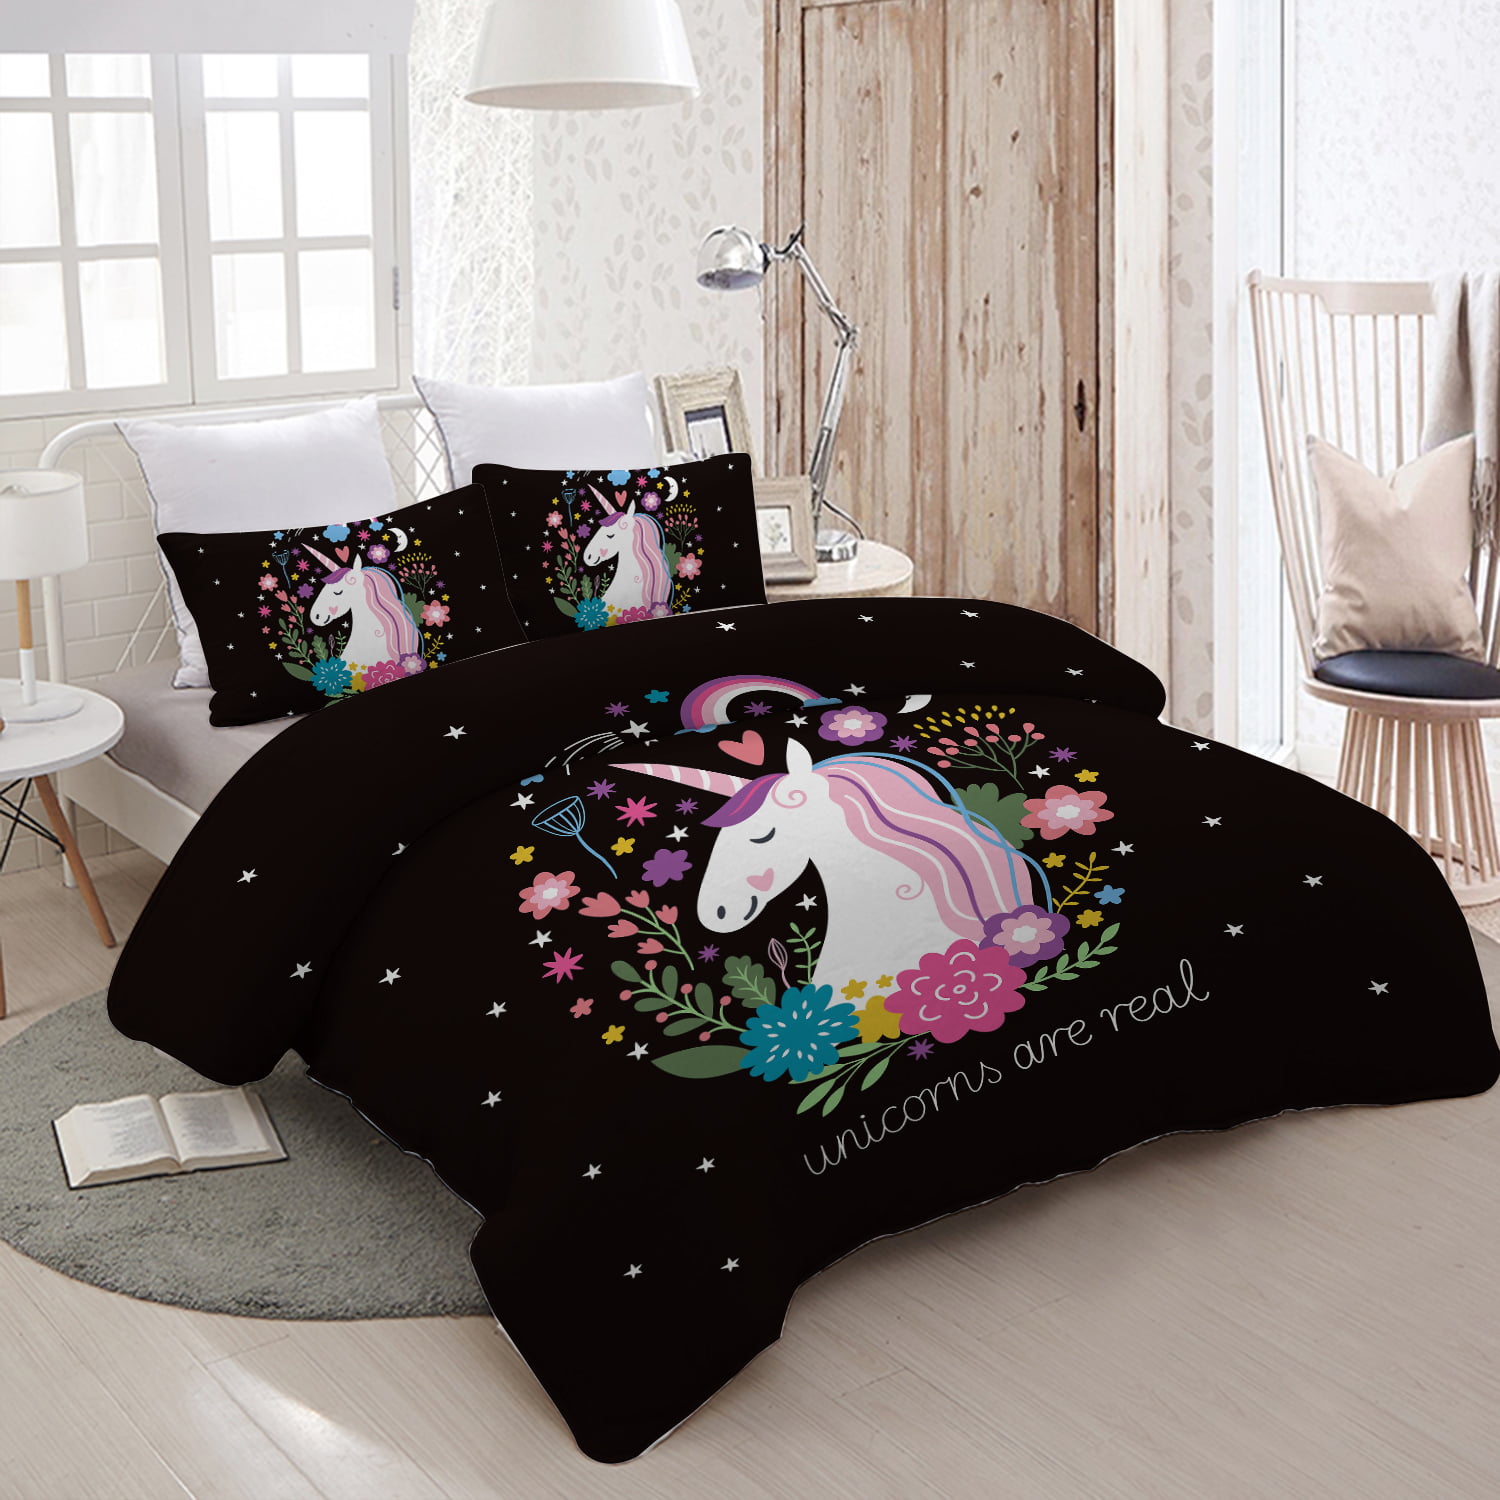 Unicorn Rainbow Comforter Bedding 3PC Bedspread TWIN Decoration Kids Horse Pink 